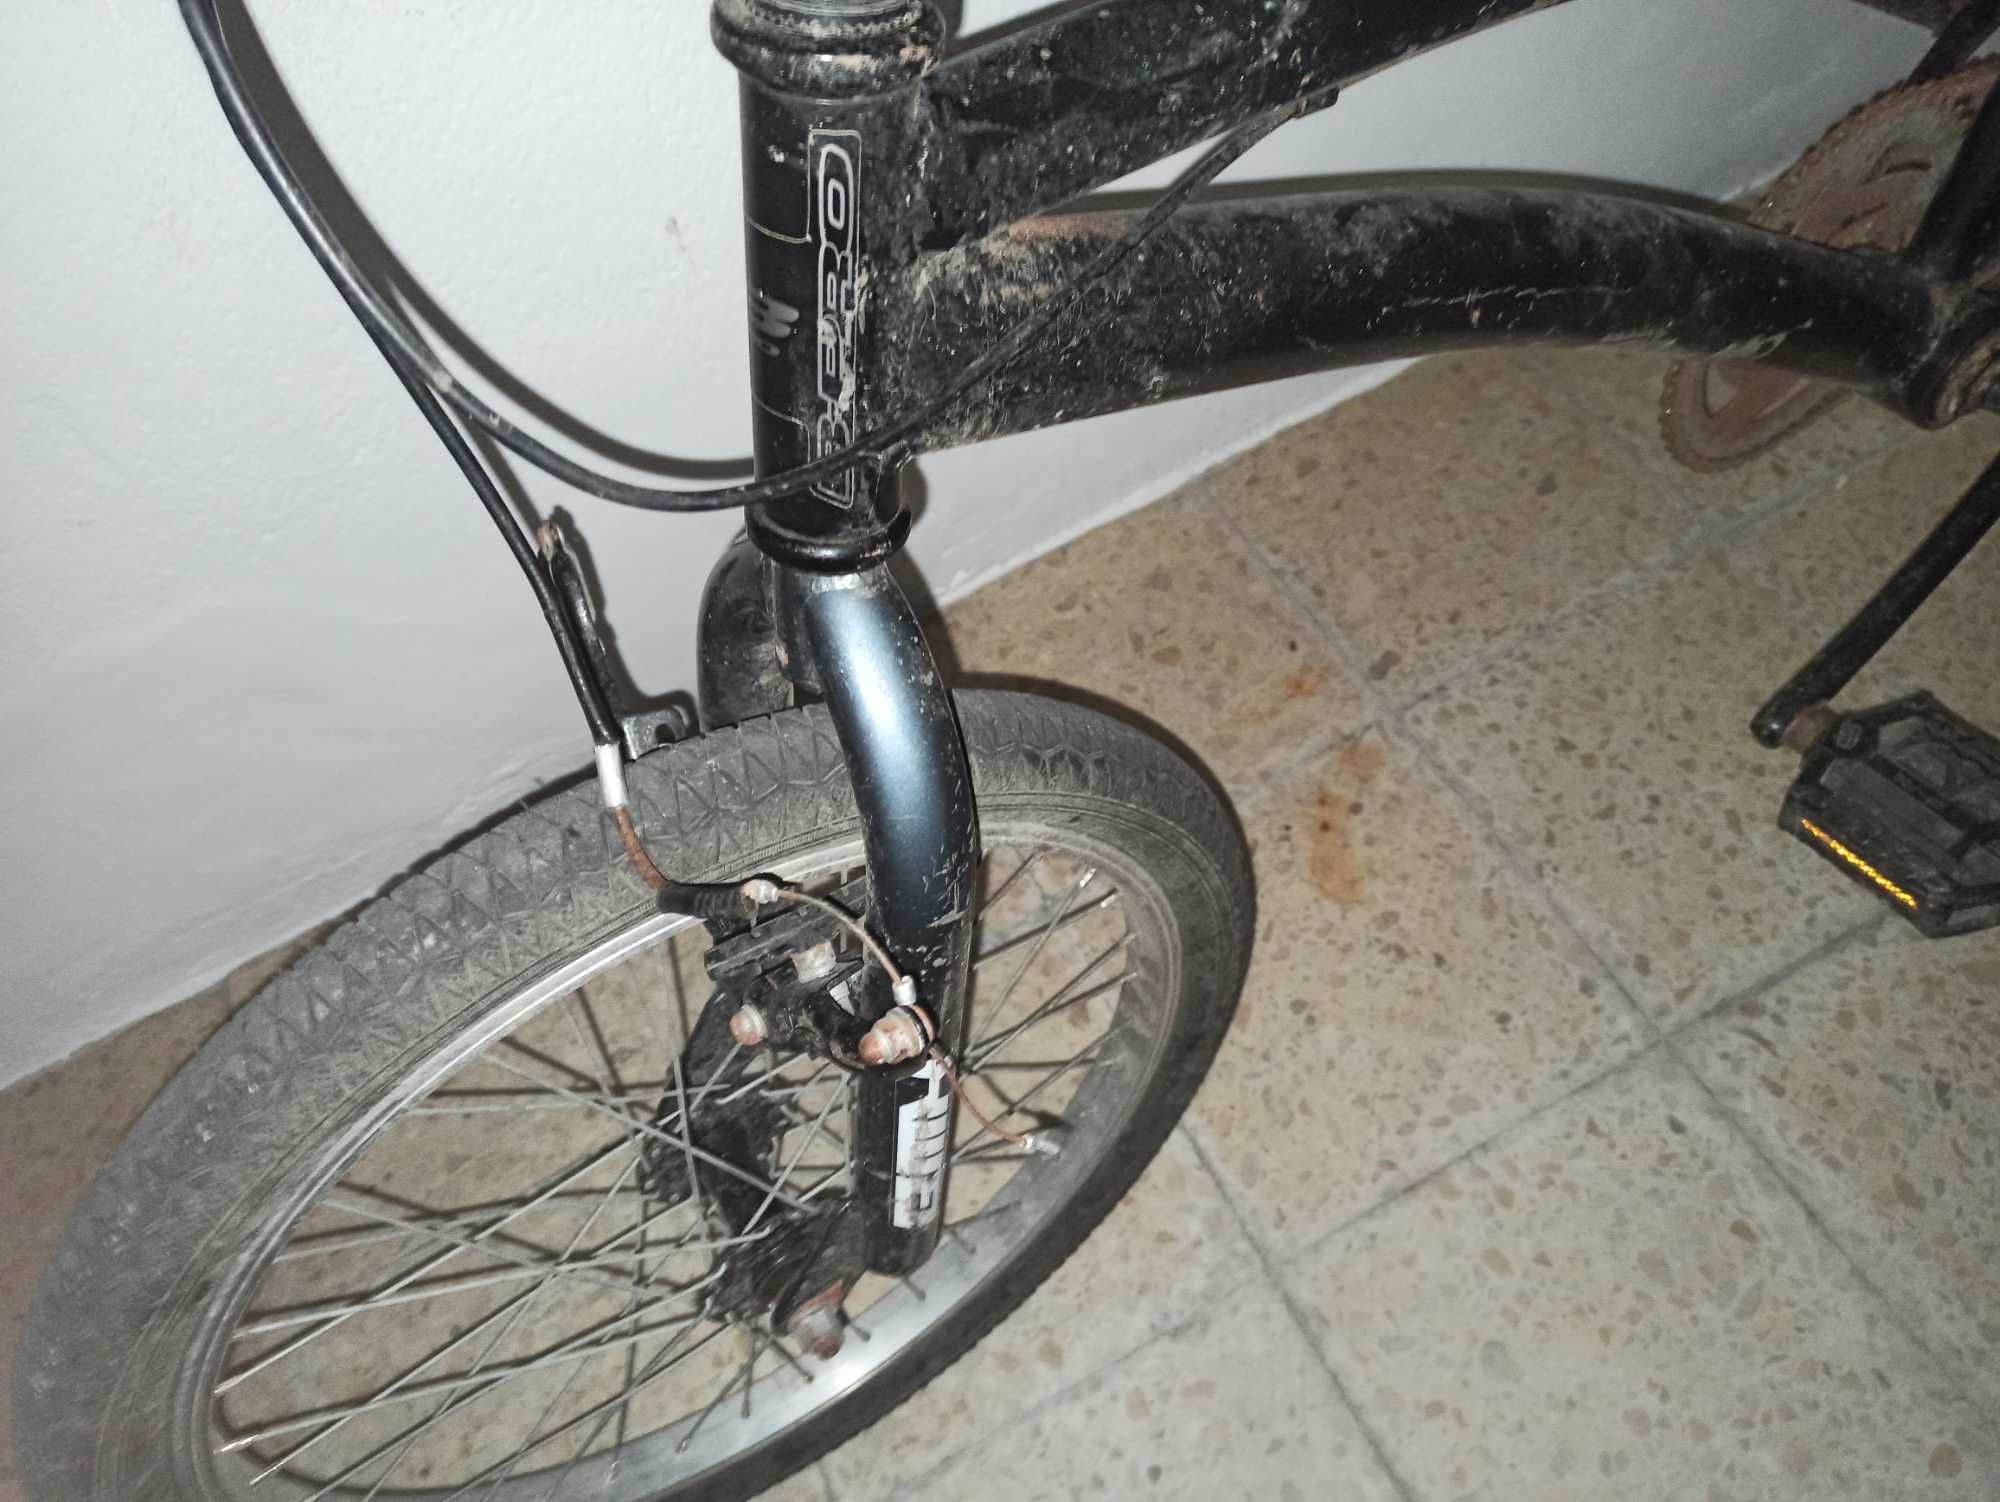 Bicicleta #BMX# estilo vice city (usada/boa)